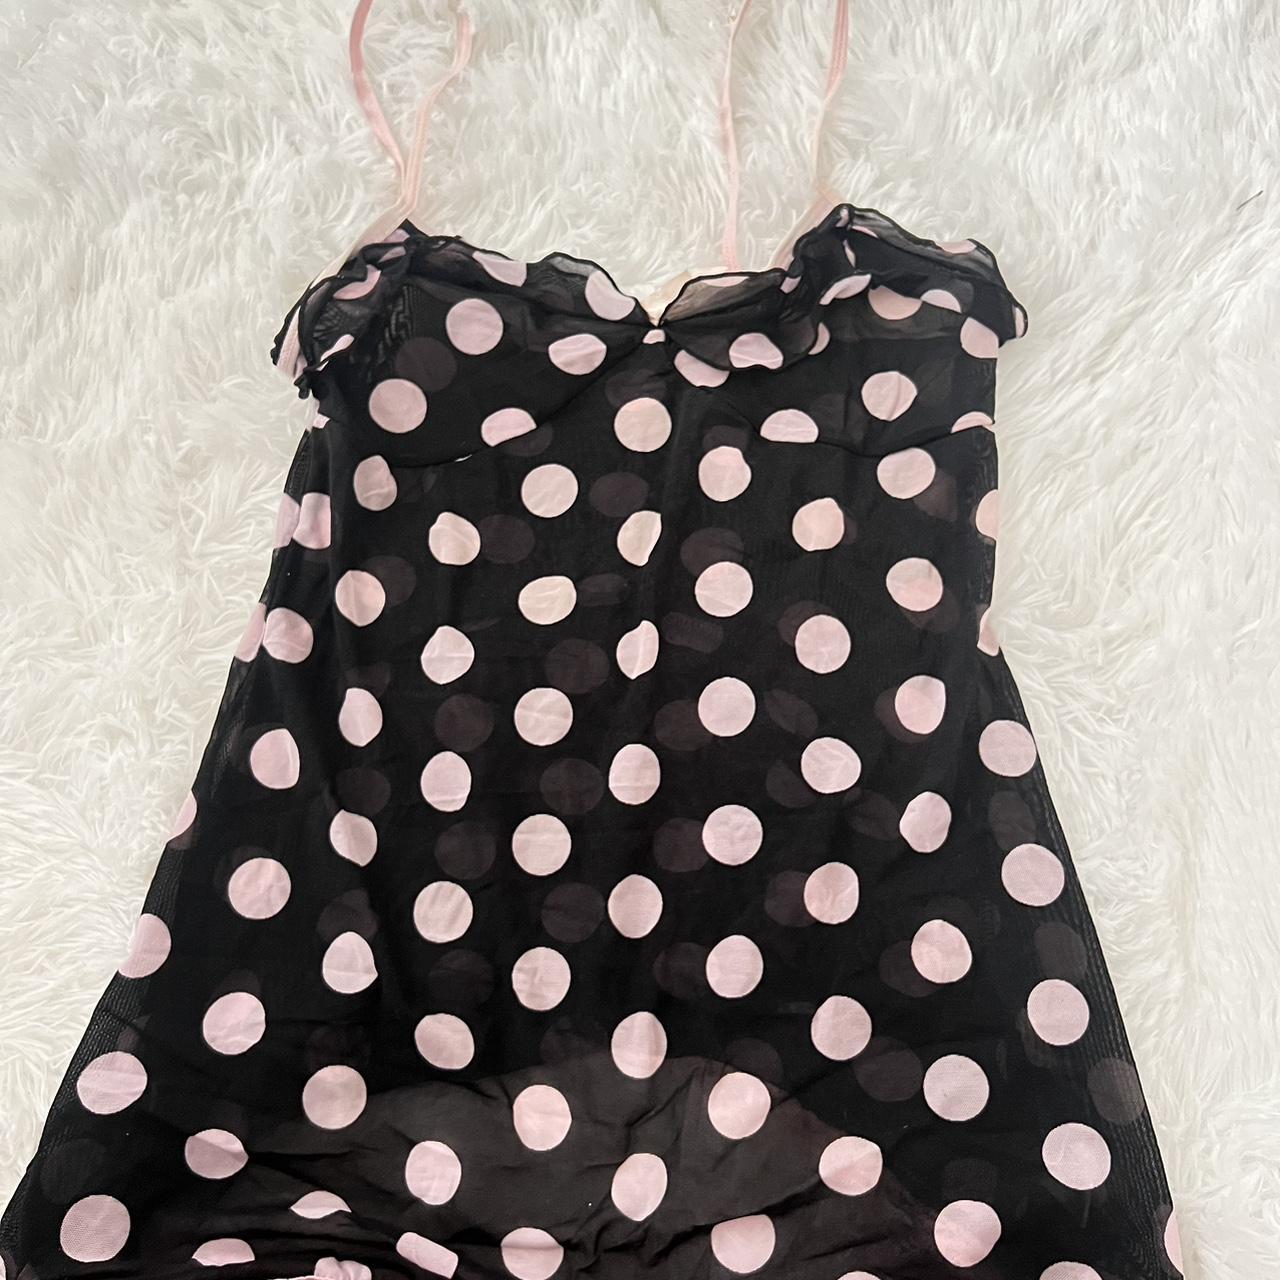 adorable pink and black lace polka dot top - Depop